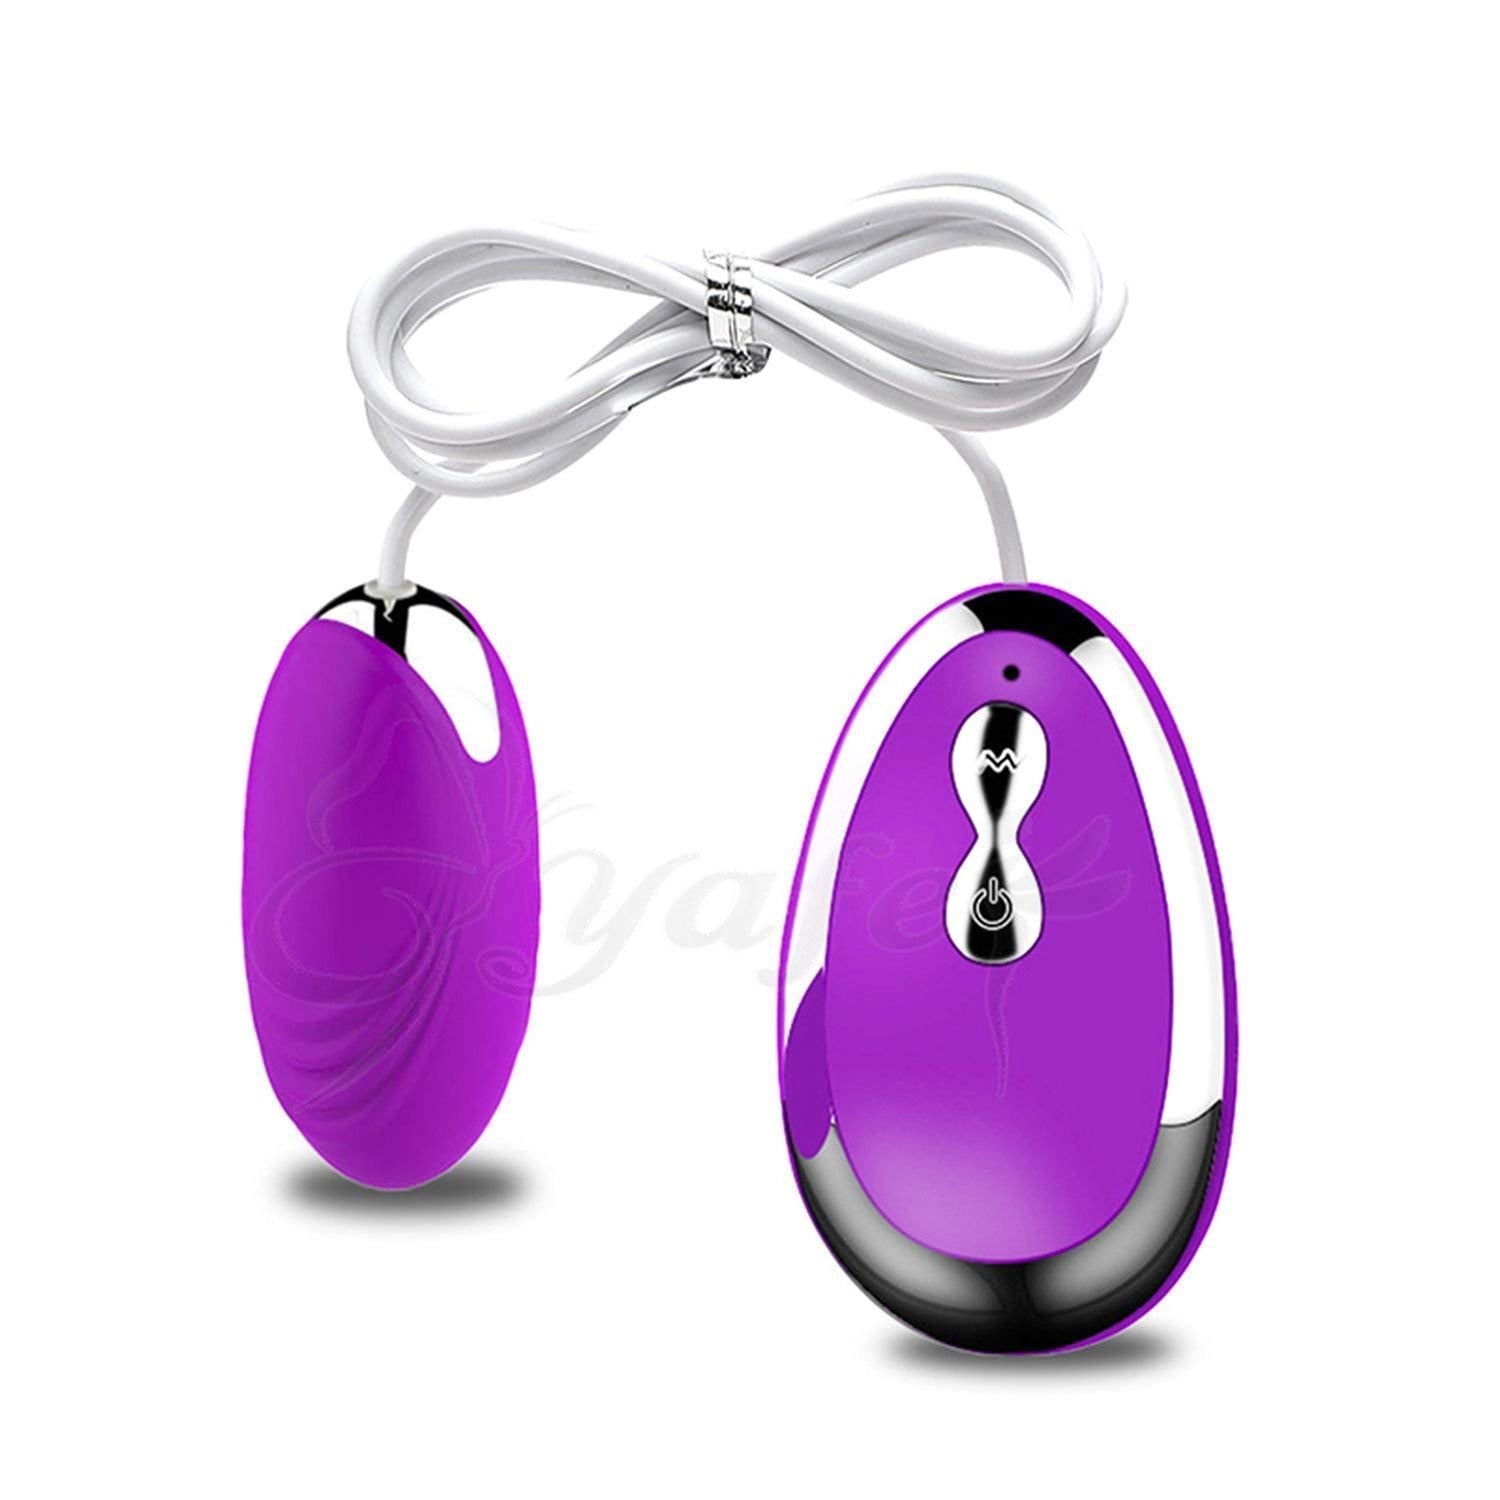 Bullet Vibrator sex toy in Pakistan – Mini Penis Magic Remote – Shaped Egg – Pink